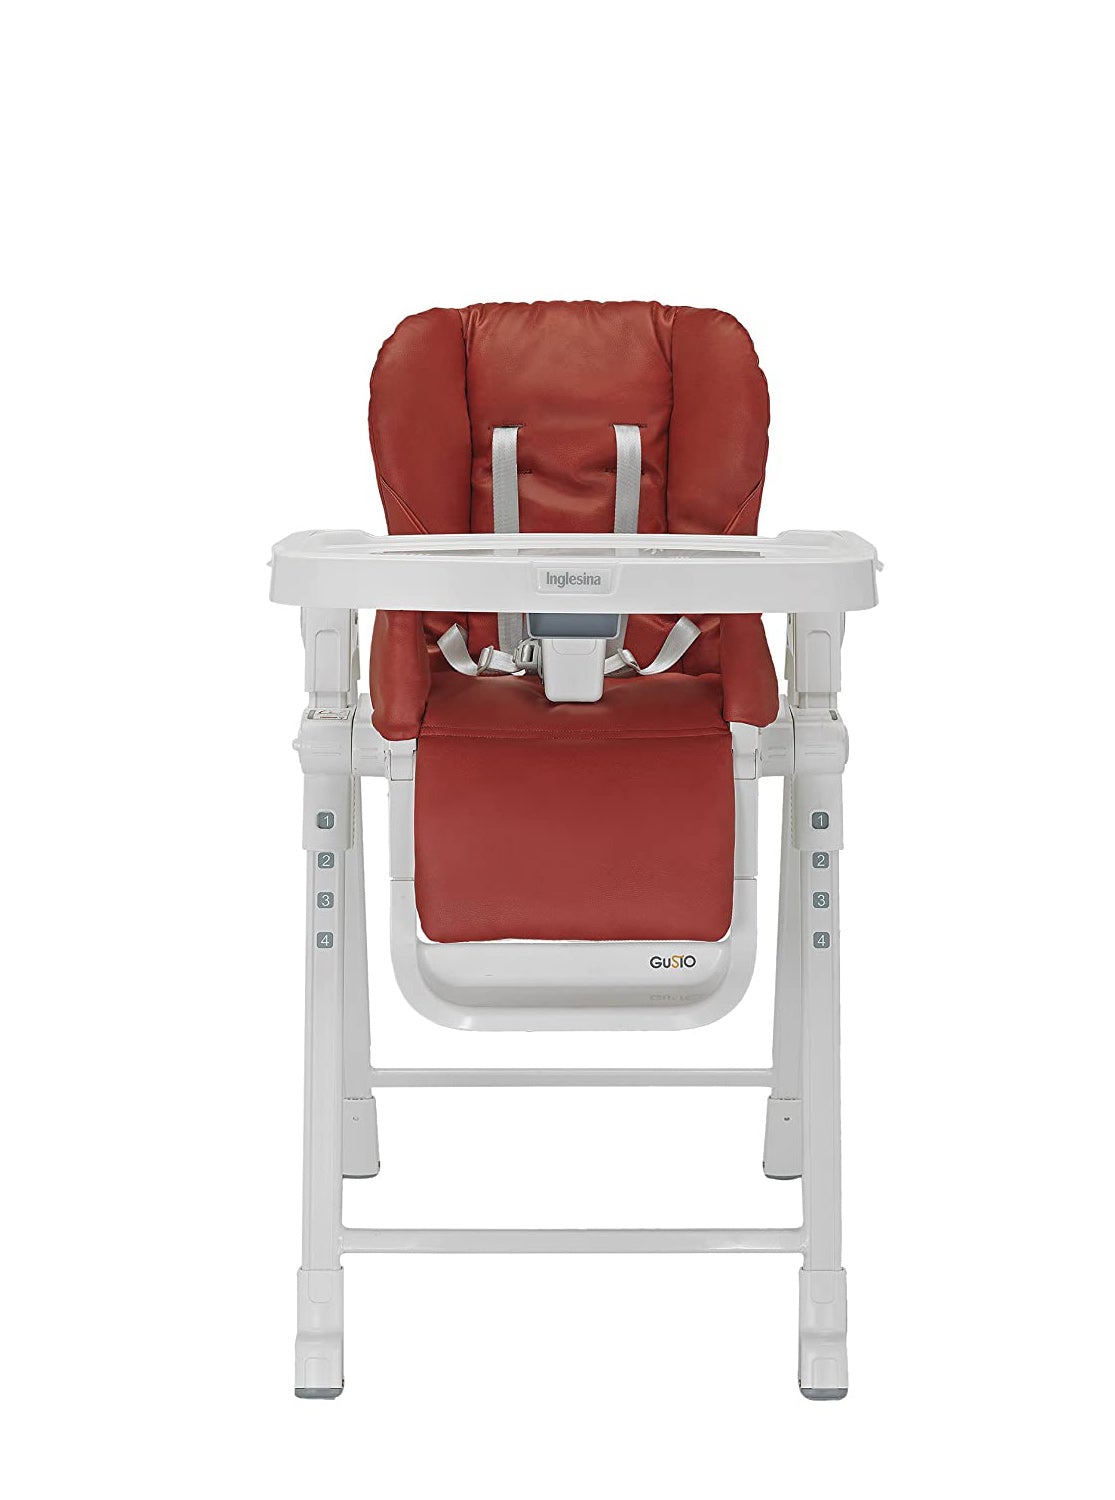 INGLESINA Gusto Highchair - ANB Baby -$100 - $300